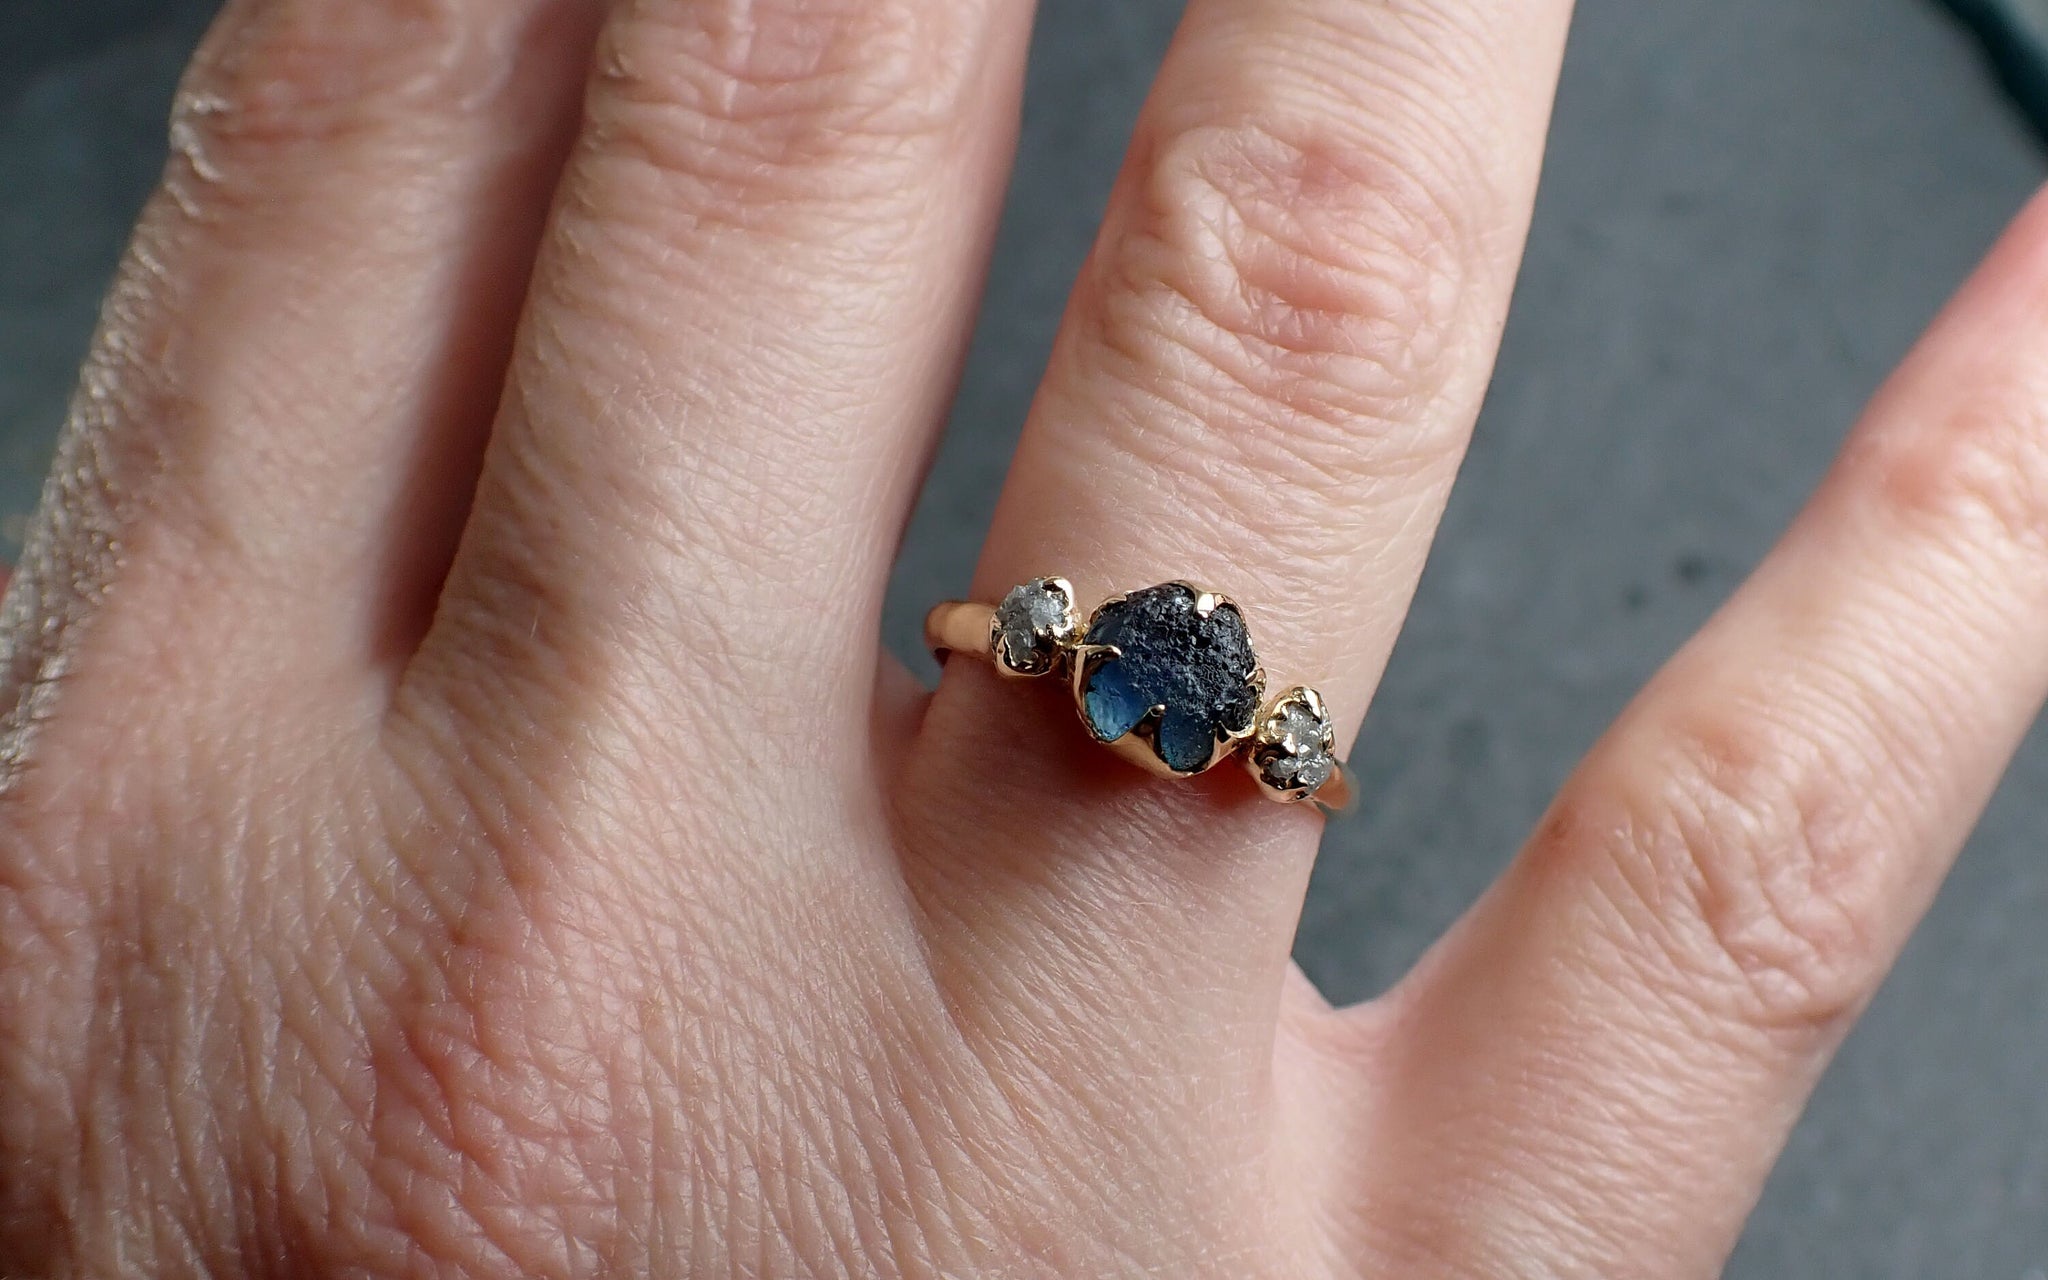 Raw blue Sapphire rough  Diamond 14k Gold Engagement Ring Wedding Ring Custom One Of a Kind Gemstone Ring Three stone  byAngeline 3045